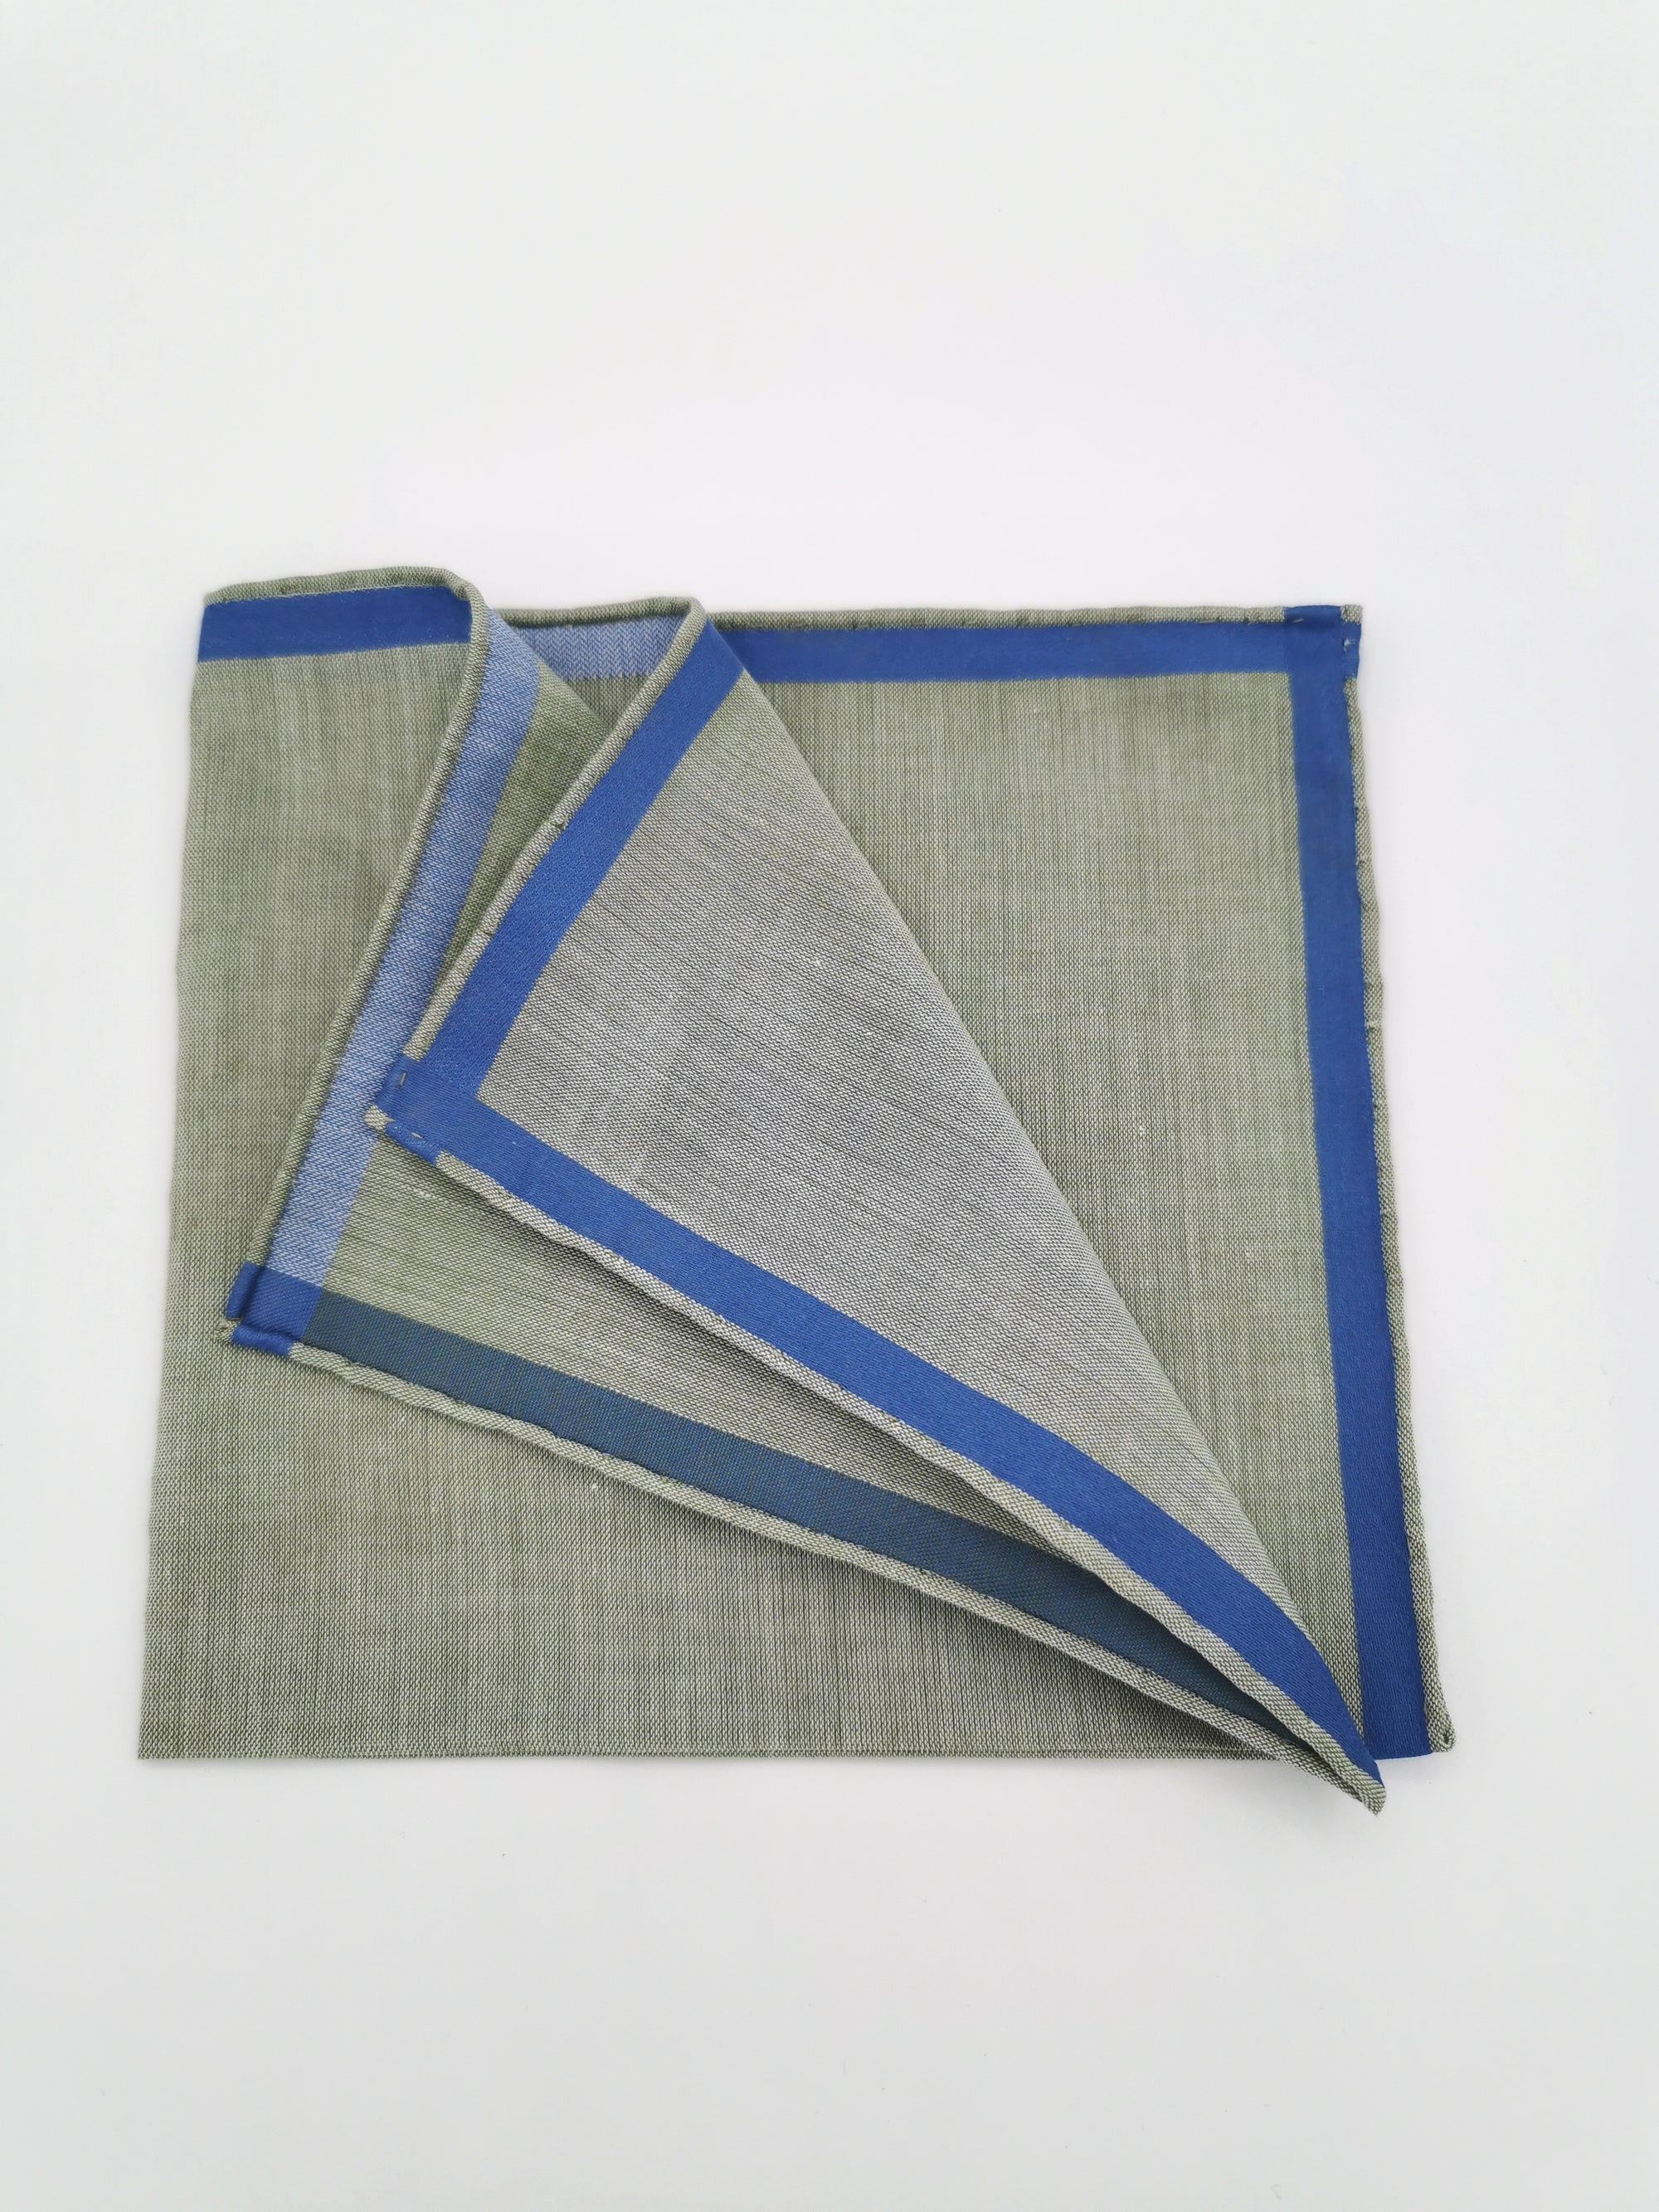 Simonnot-Godard green pocket square with blue satin border